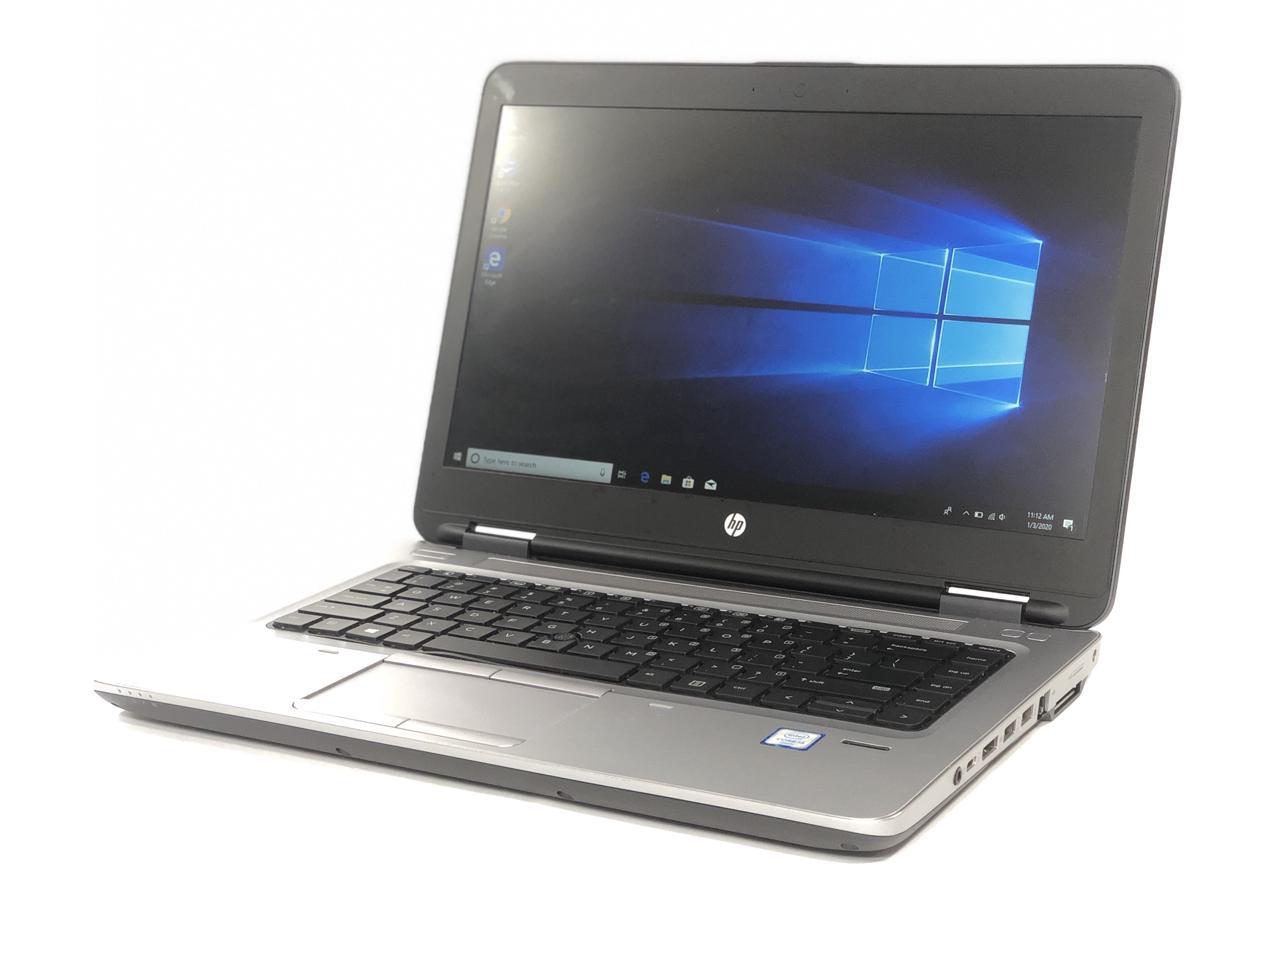 Hp Probook 640 G2 Laptop 14 In Intel Core I3 6100U 2.3Ghz 8Gb Ddr4 Ram 500Gb Hdd Windows 10